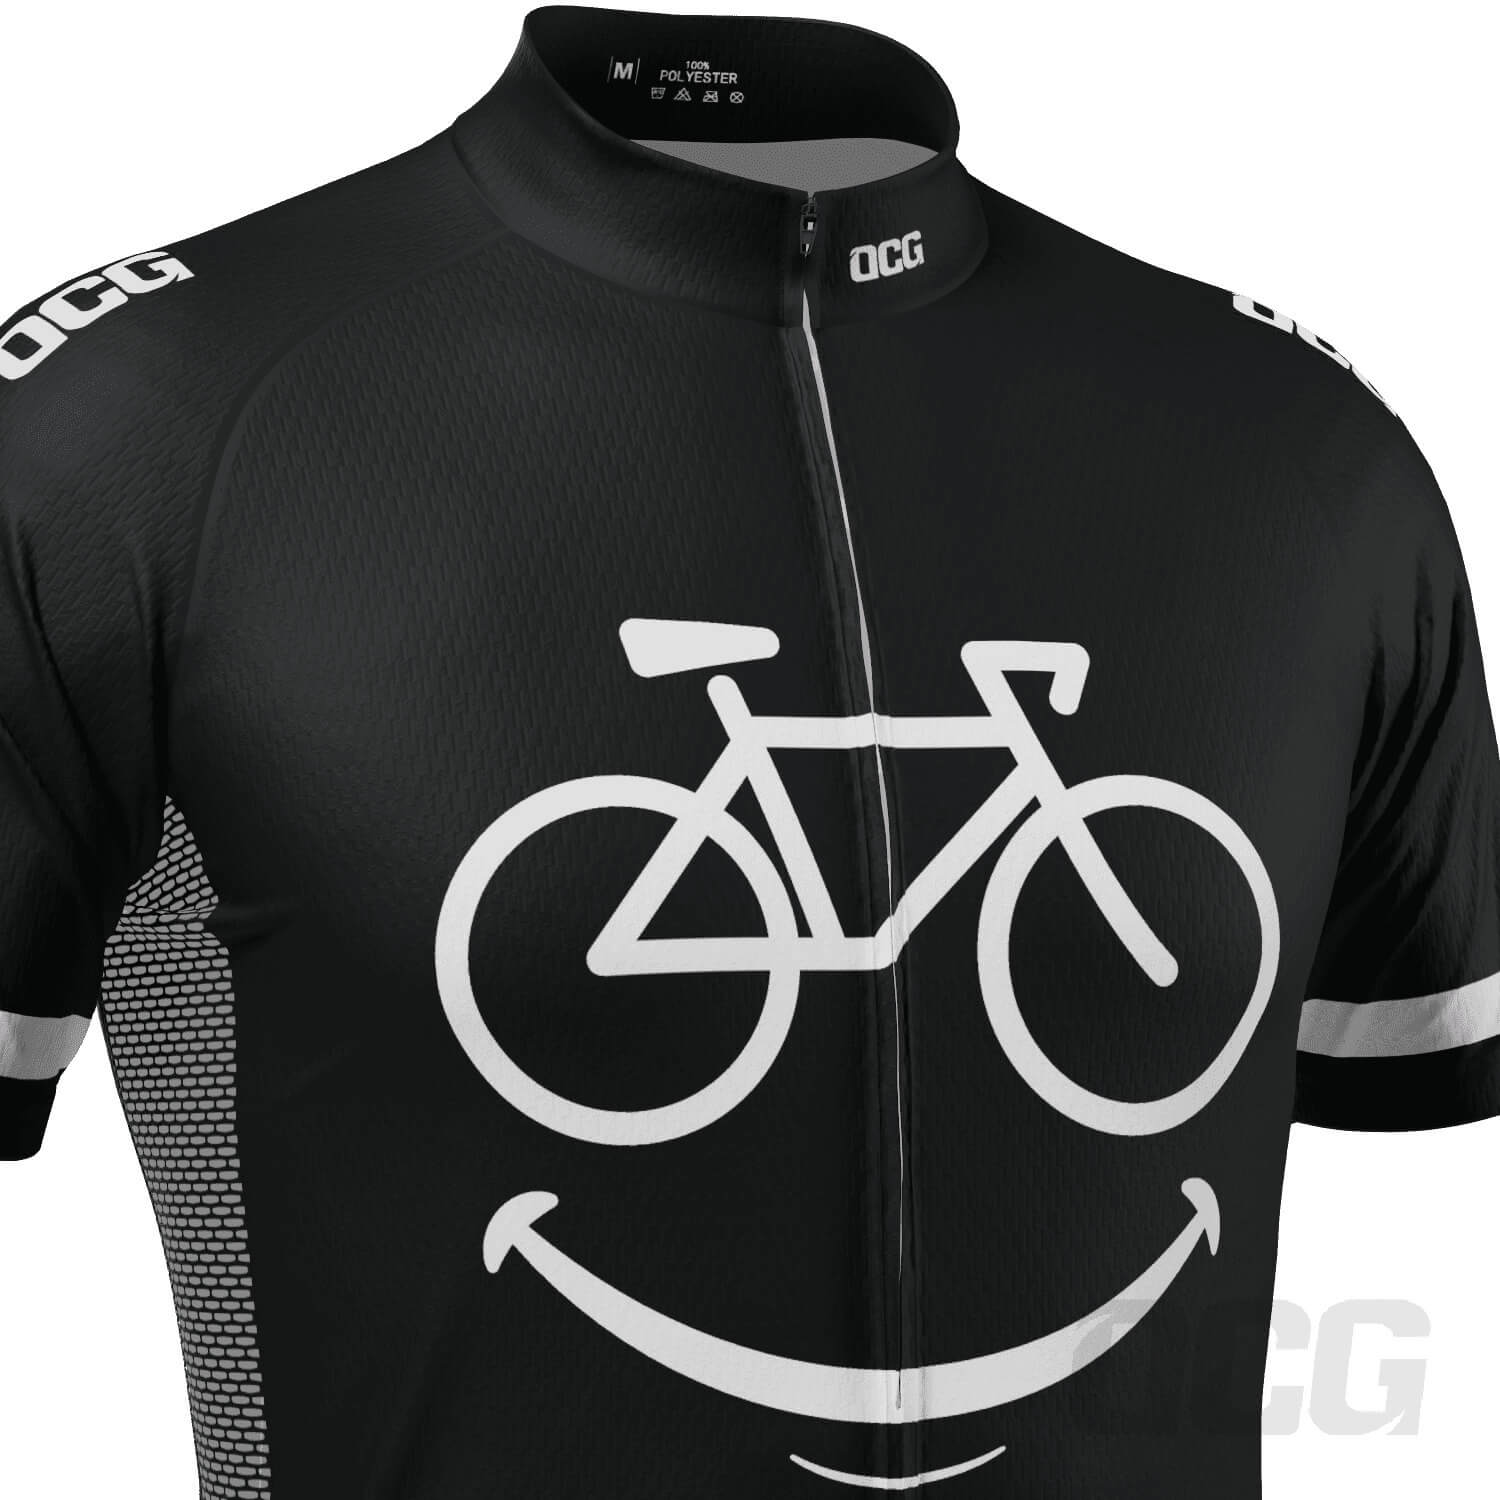 Men's Smiling Bike Short Sleeve Cycling Jersey